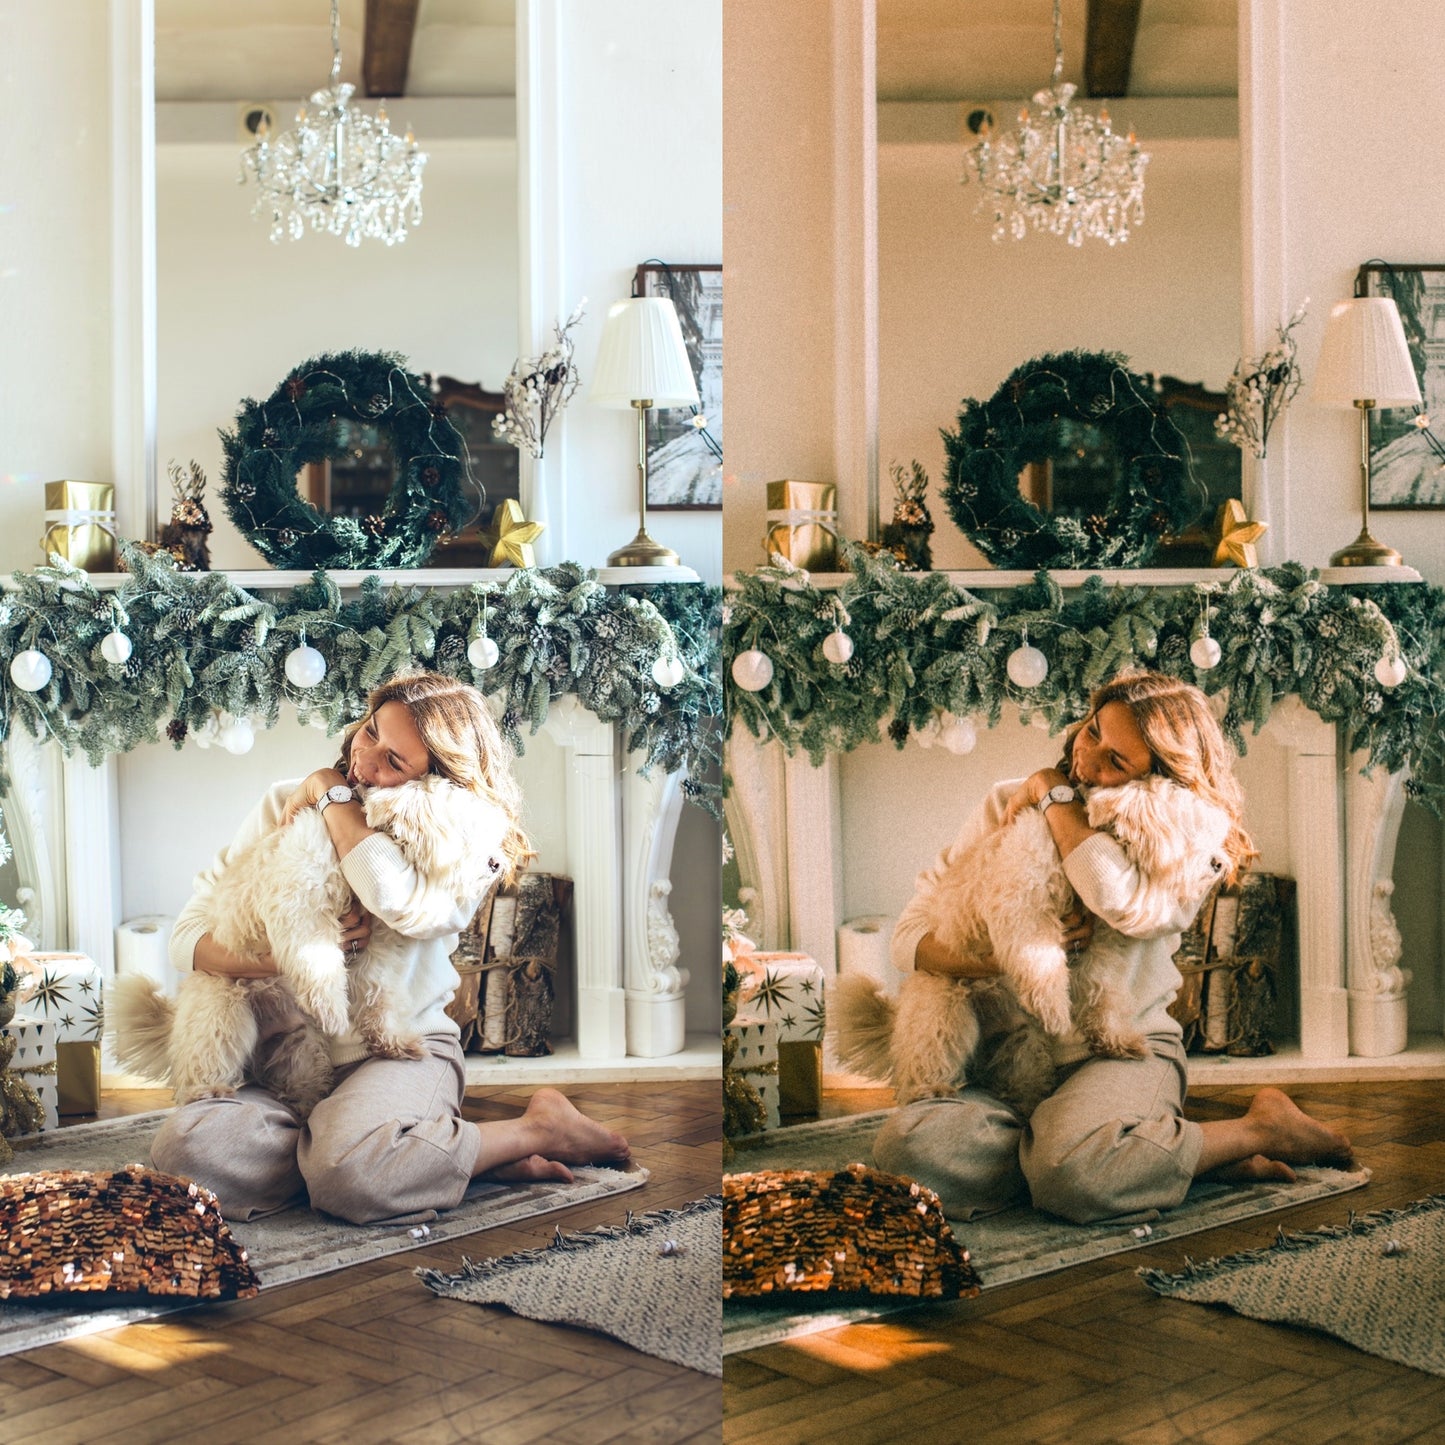 Cozy Christmas | MOBILE & DESKTOP